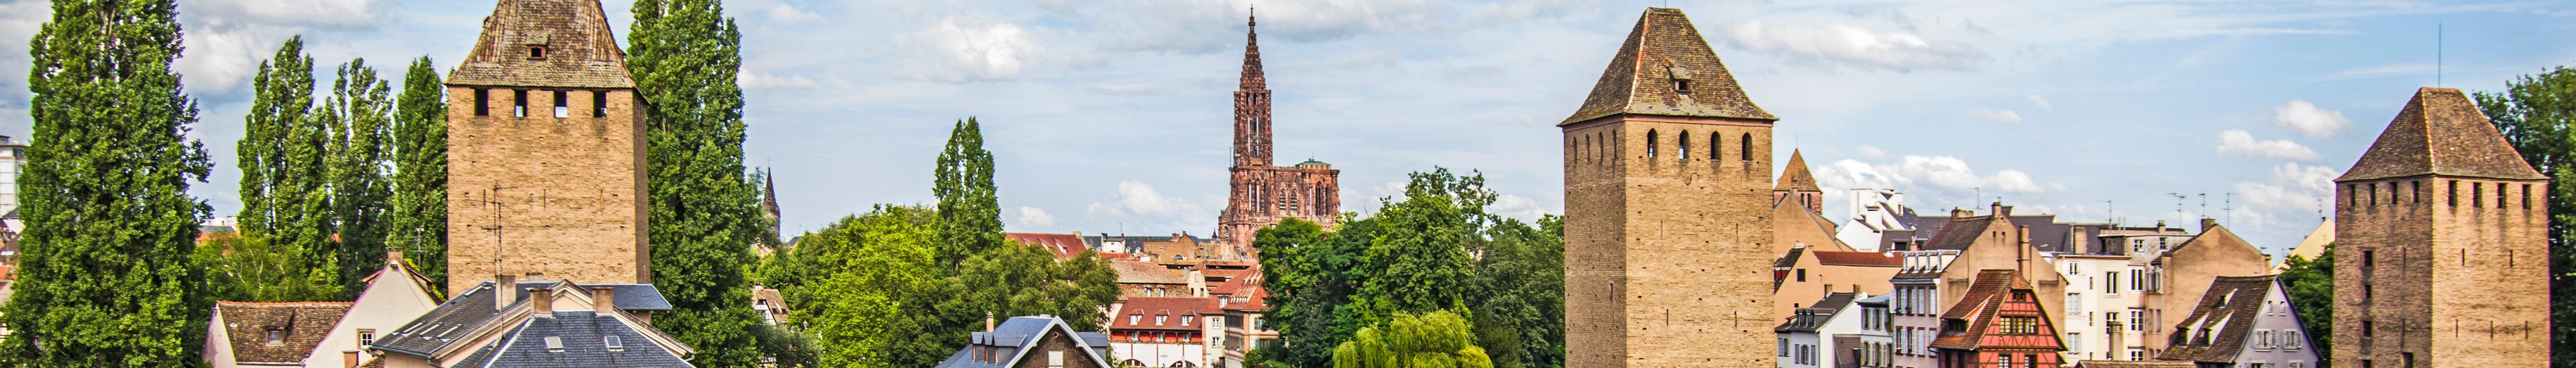 Banner image for Strasbourg on GigsGuide